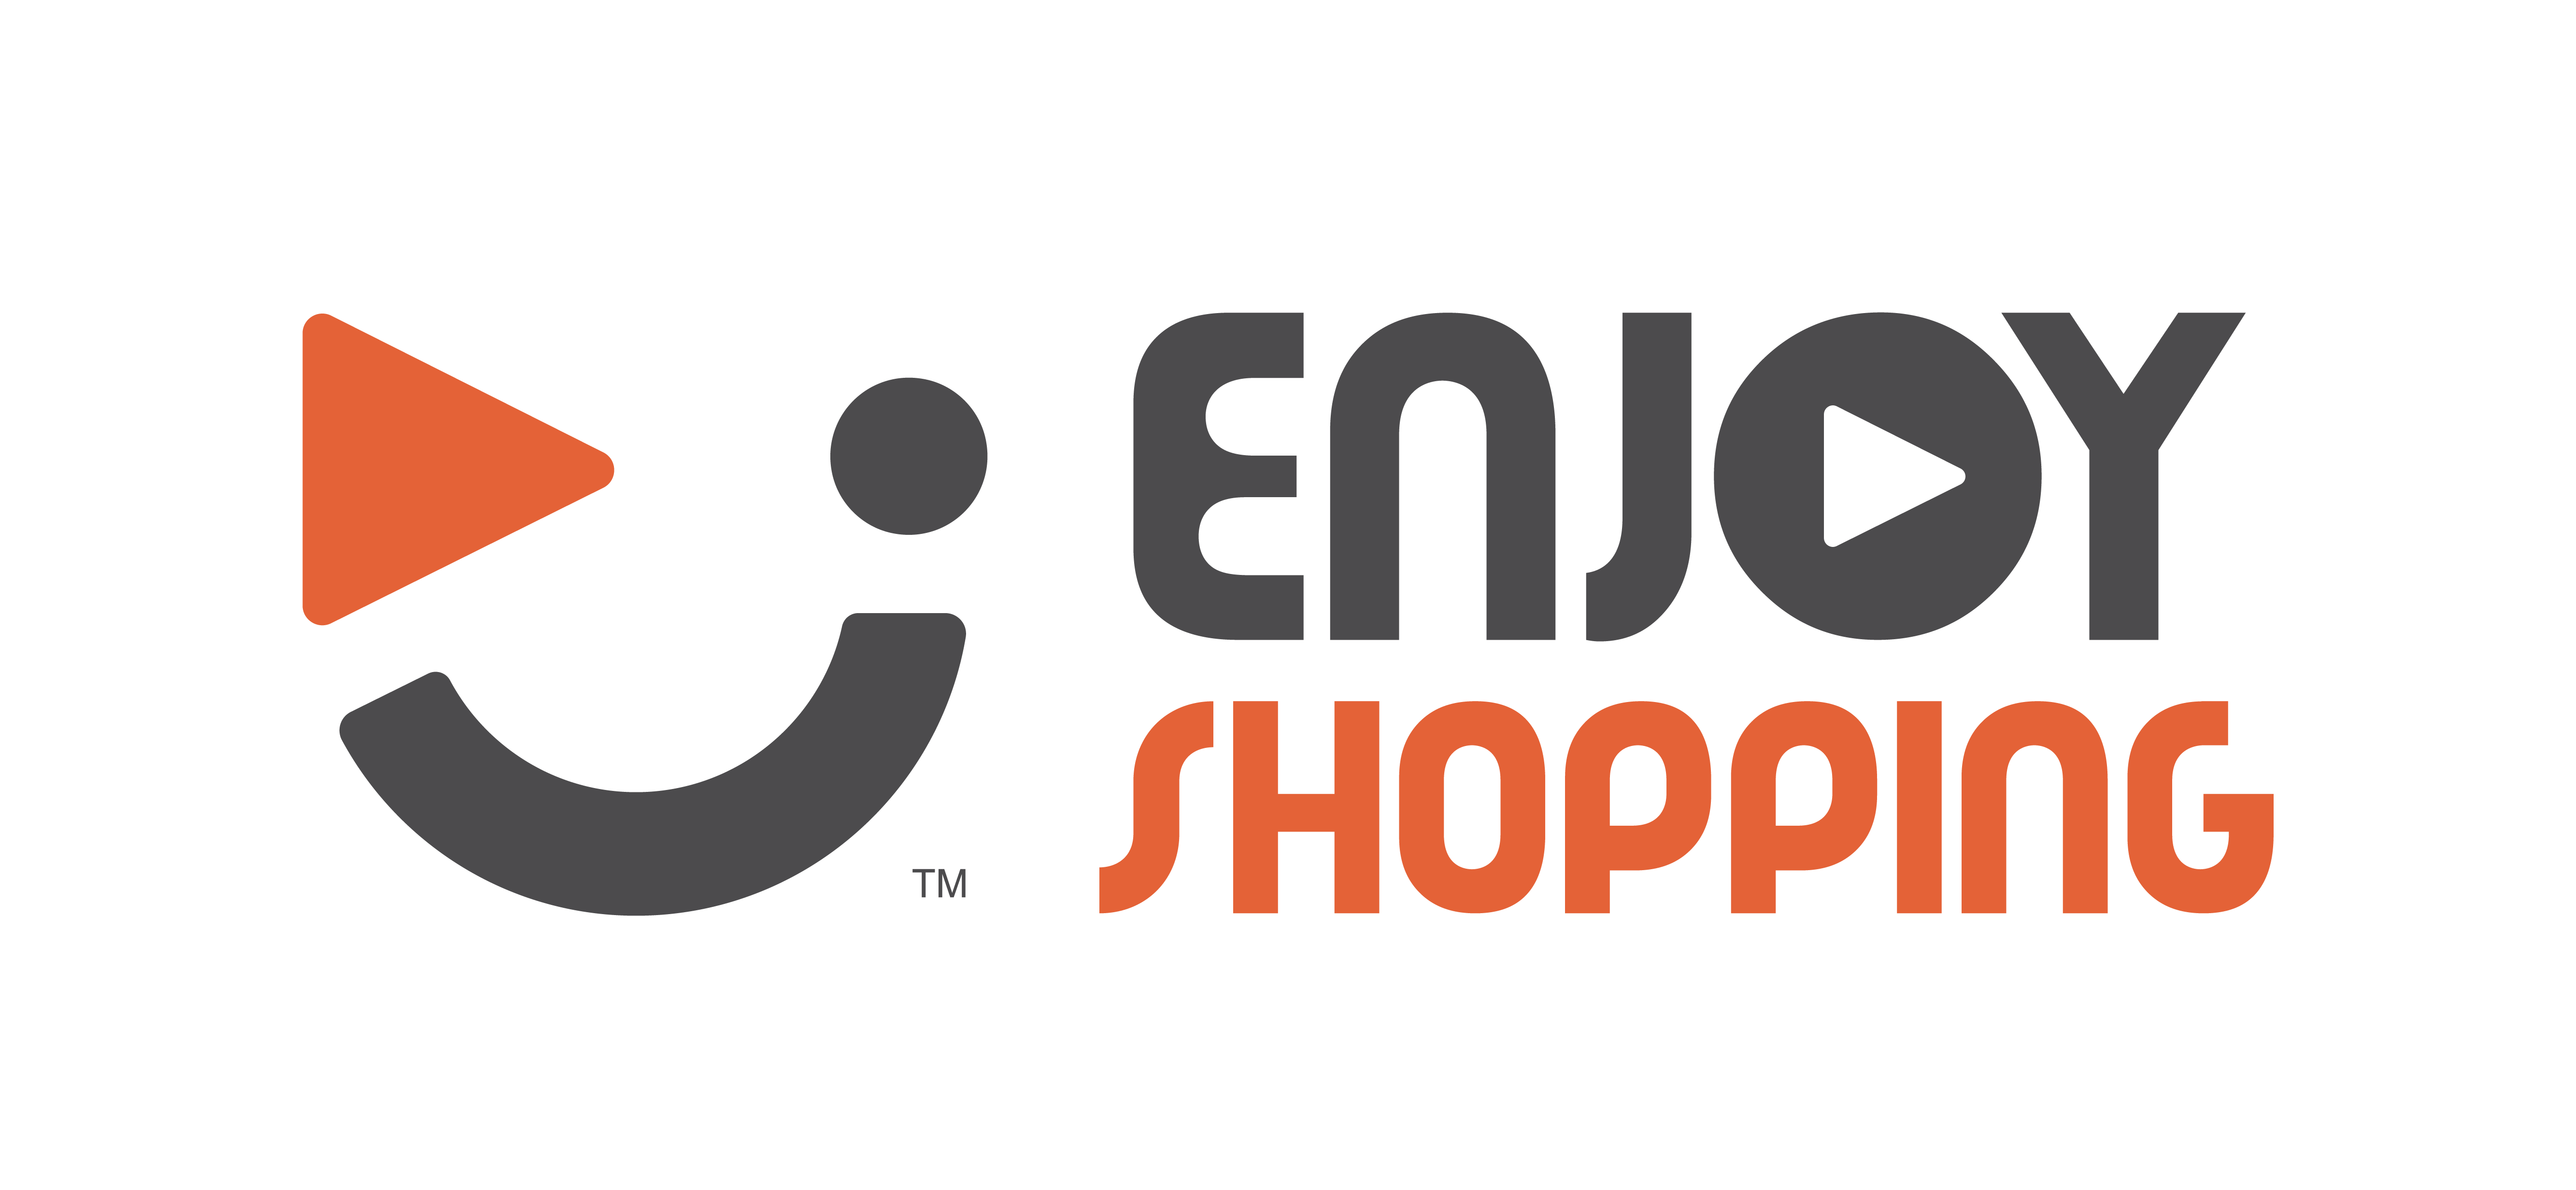 Shopping Logo - Enjoy TV Shopping